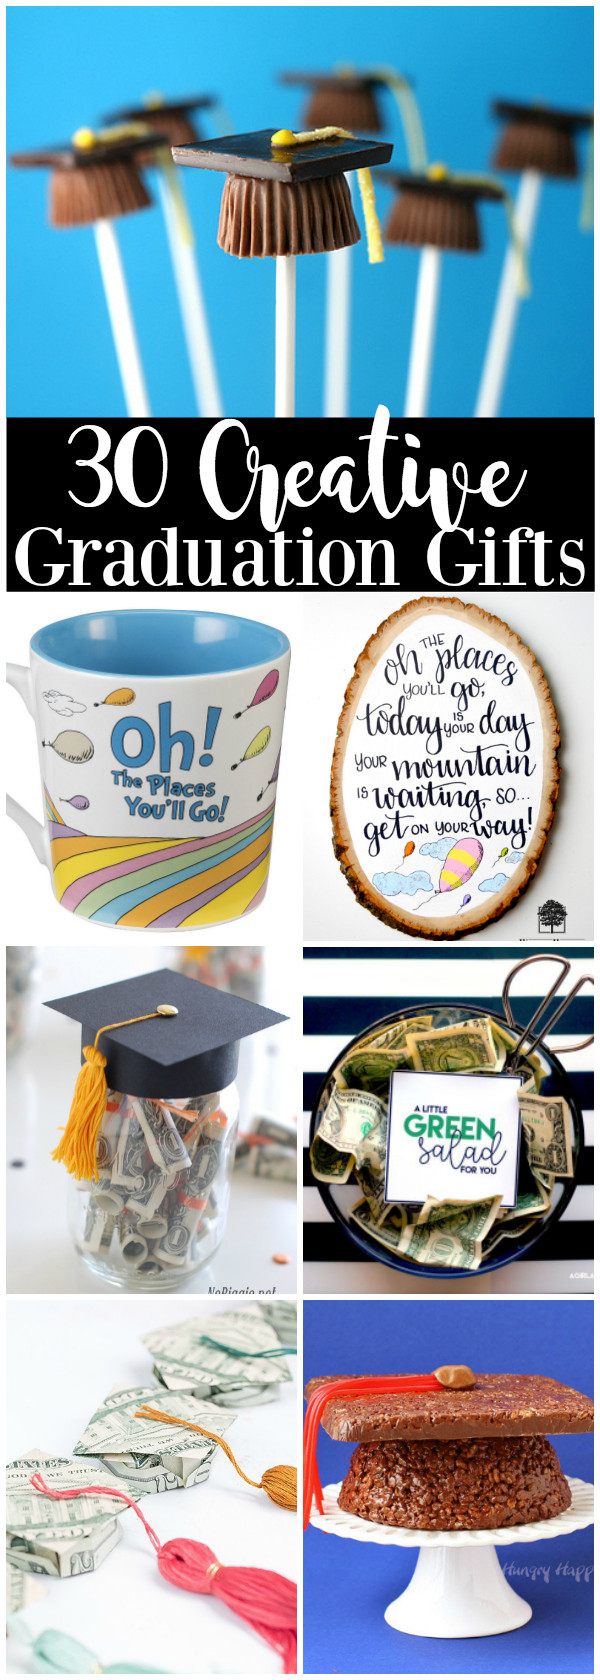 Creative Graduation Gift Ideas
 30 Creative Graduation Gift Ideas